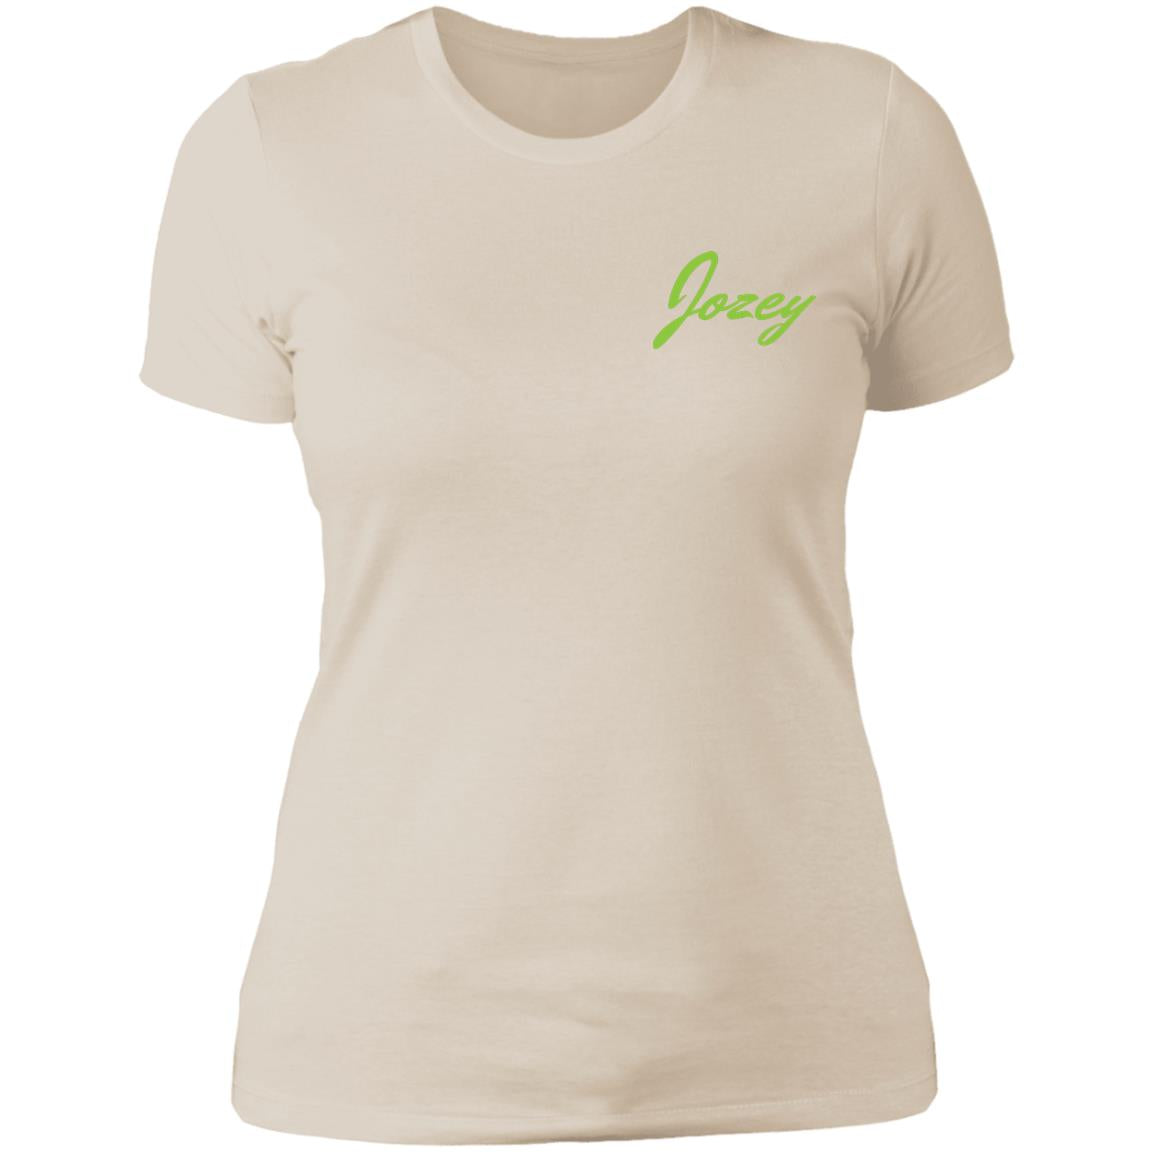 Jozey Cozey Women's T-Shirt